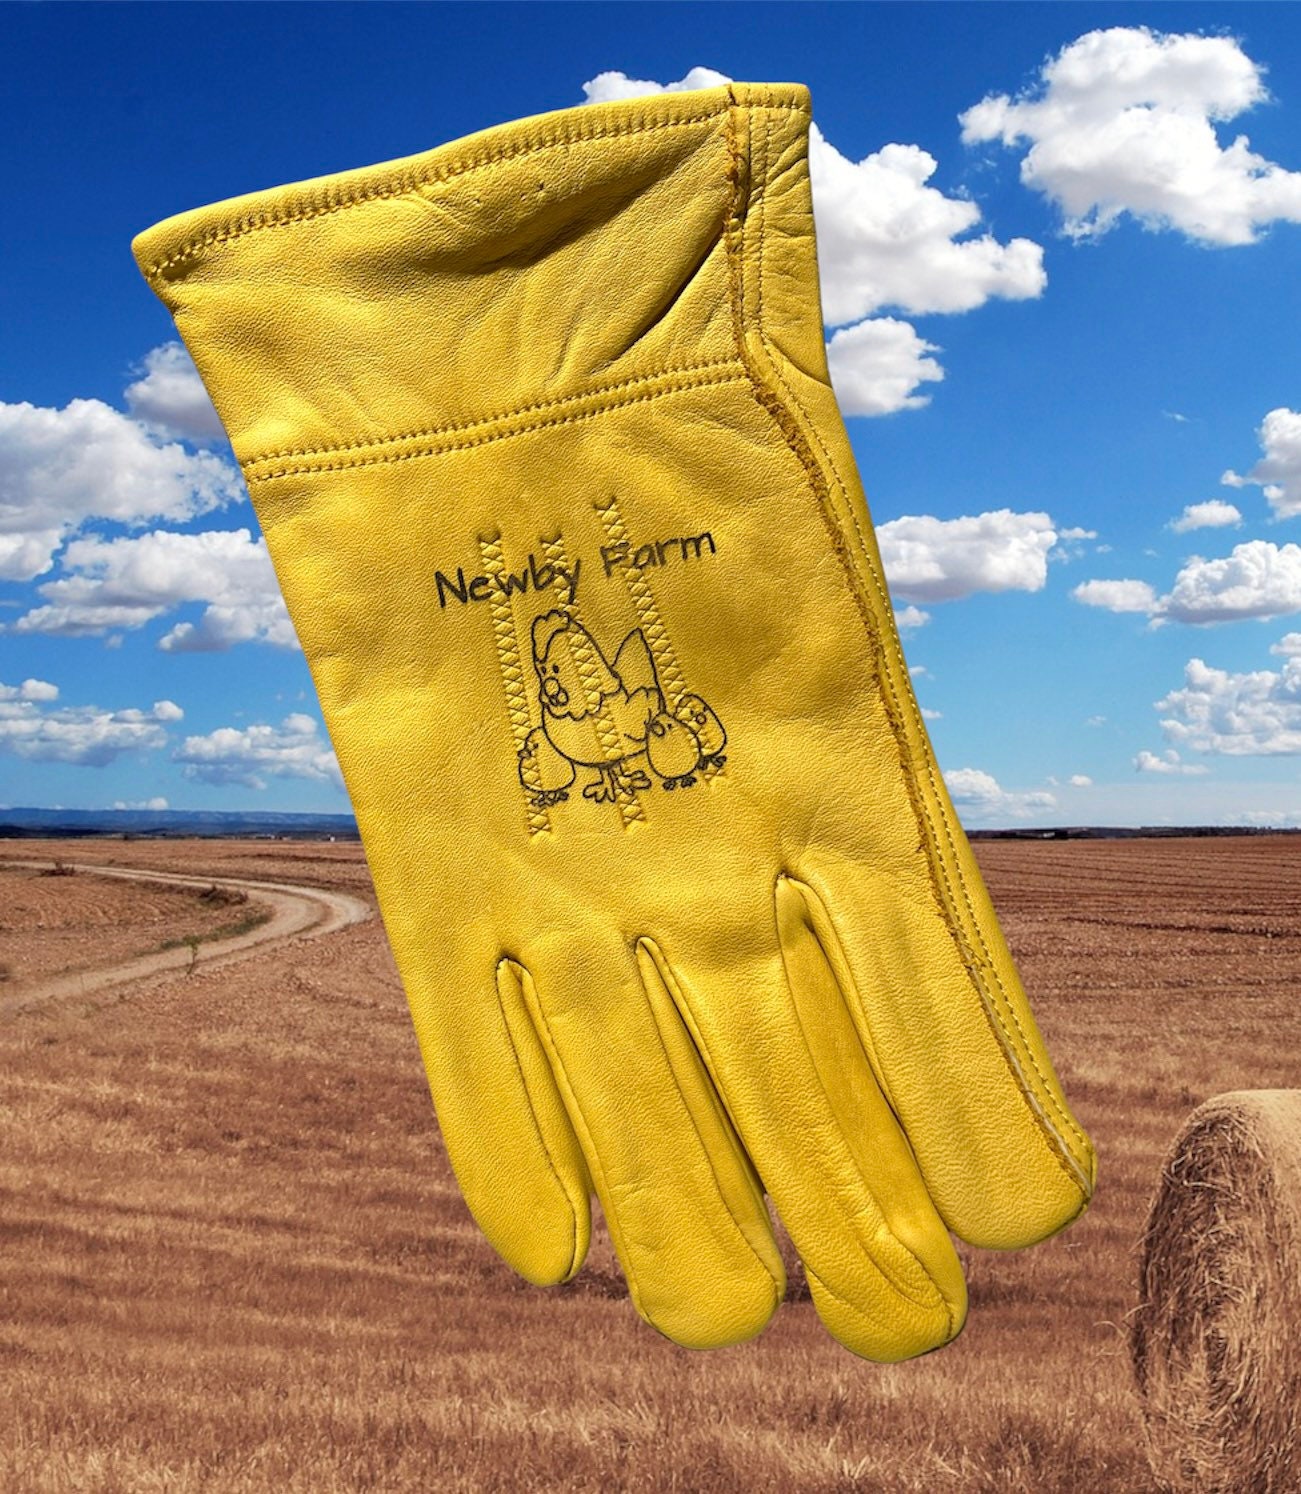 Work Gloves, Customized Personalized Gardening Working Gloves, Construction  Worker Gloves Gift for Men, Custom Work Gloves, Wells Lamont 